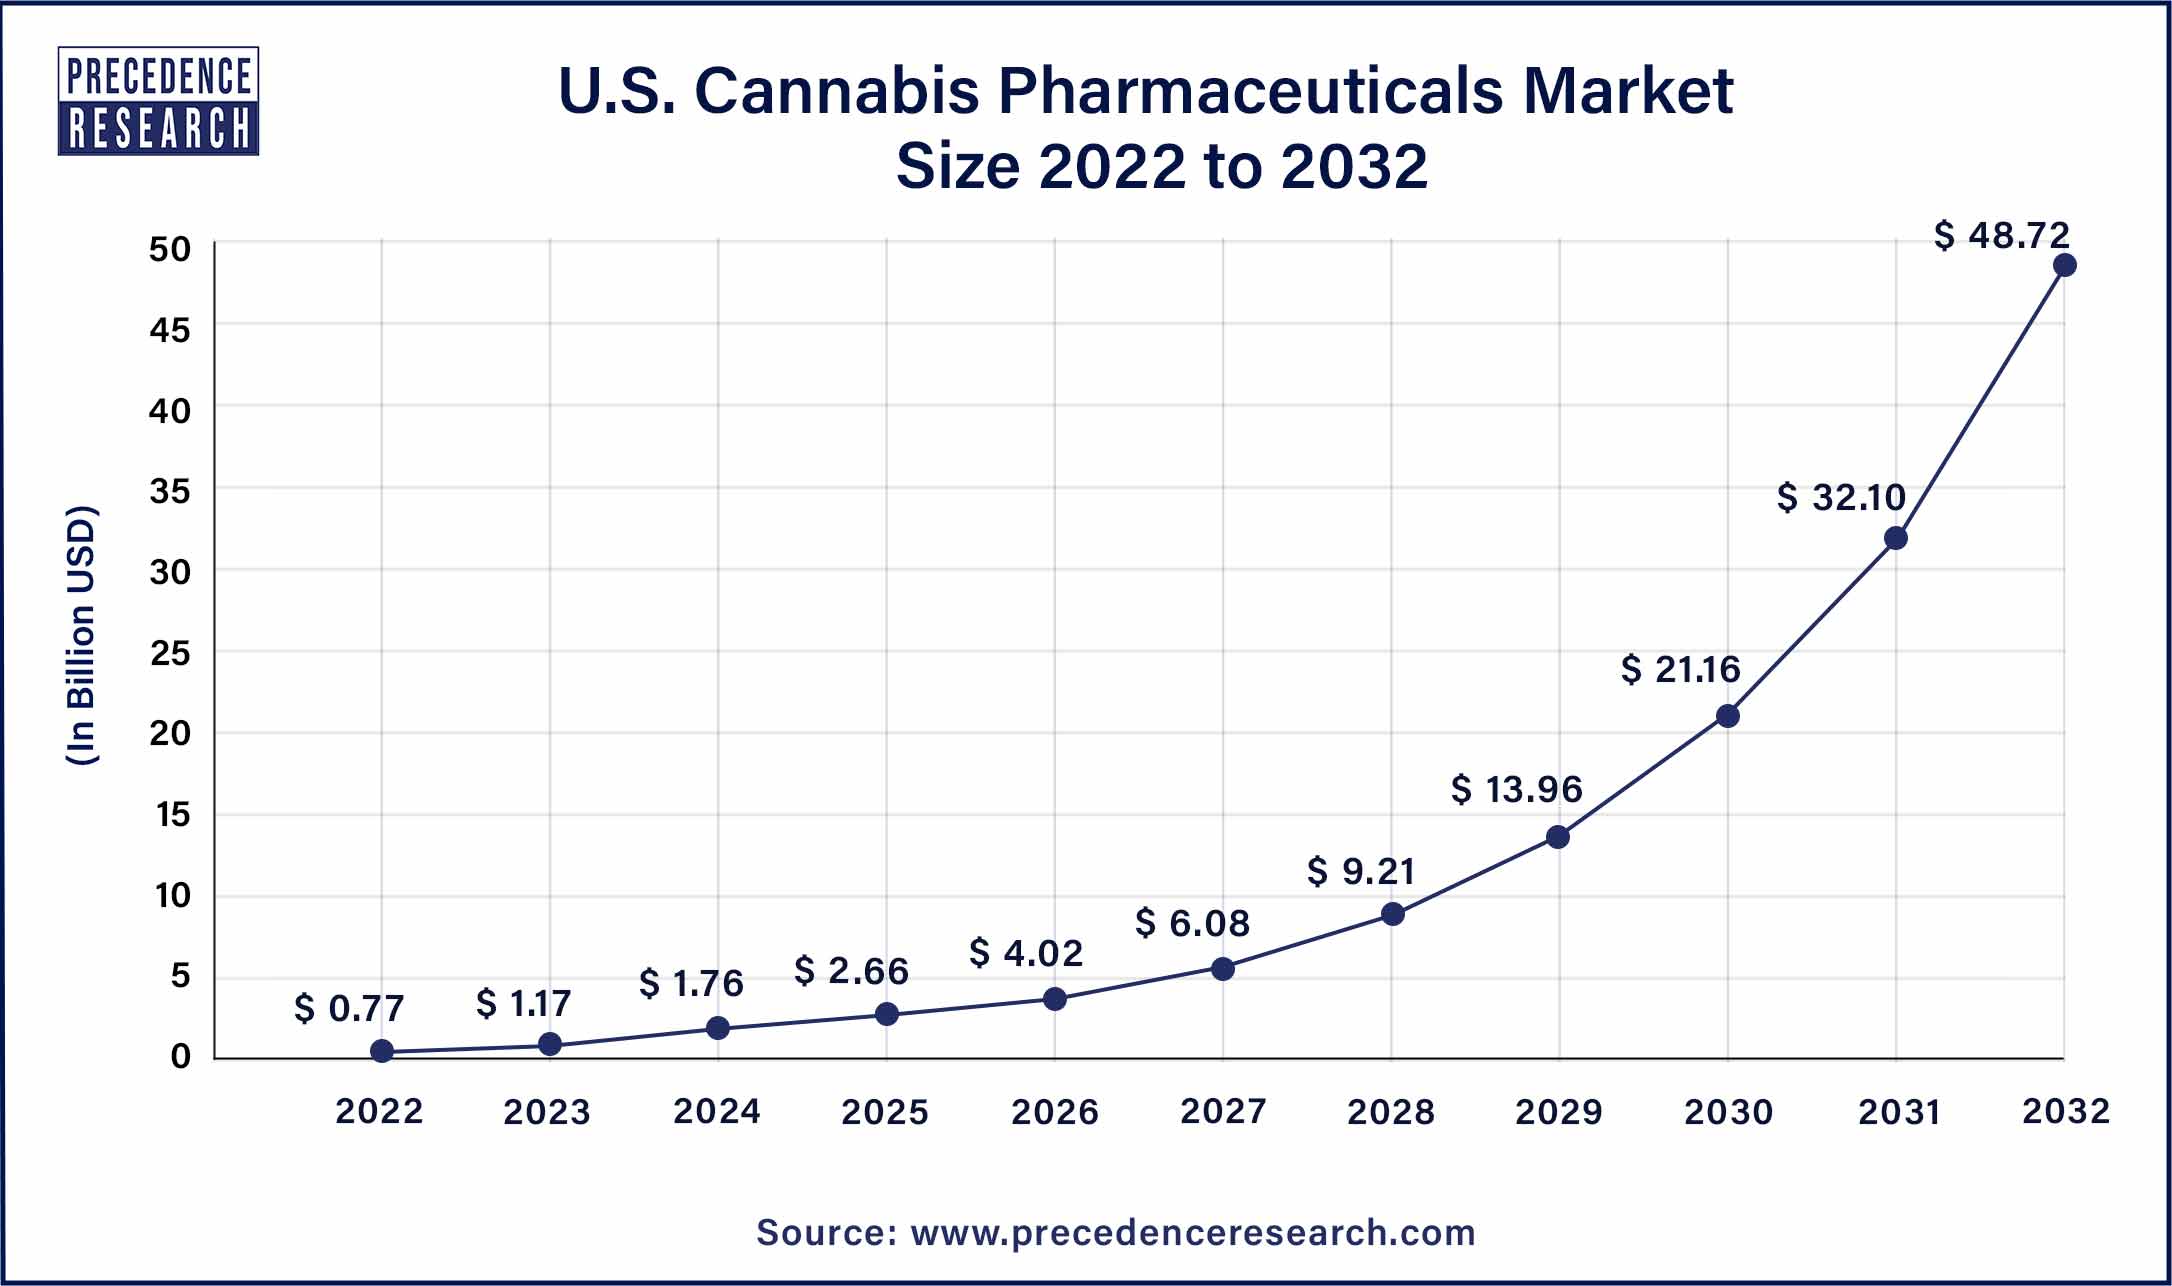 U.S. Cannabis Pharmaceuticals Market Size 2023 To 2032